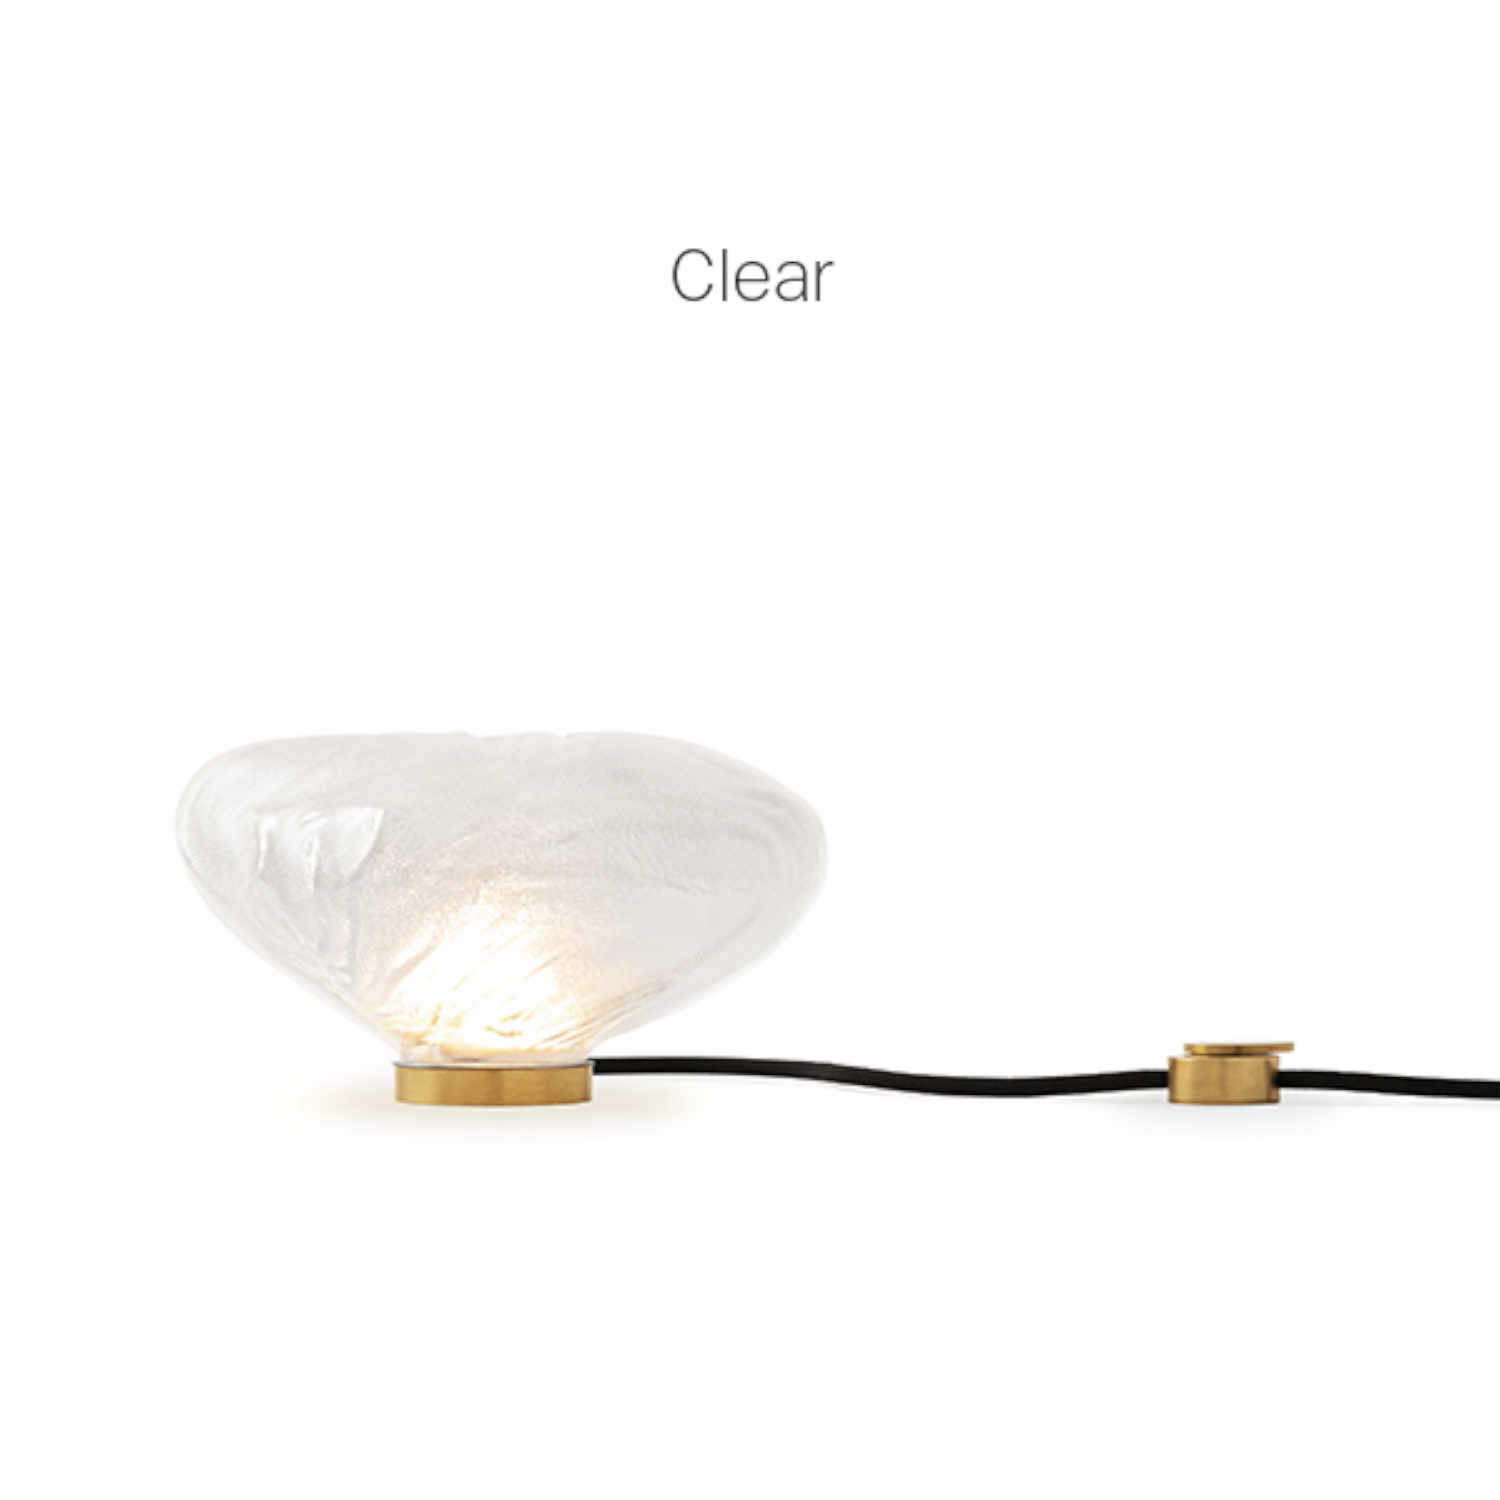 73t Table Light LED Tischleuchte, Farbe clear von Bocci